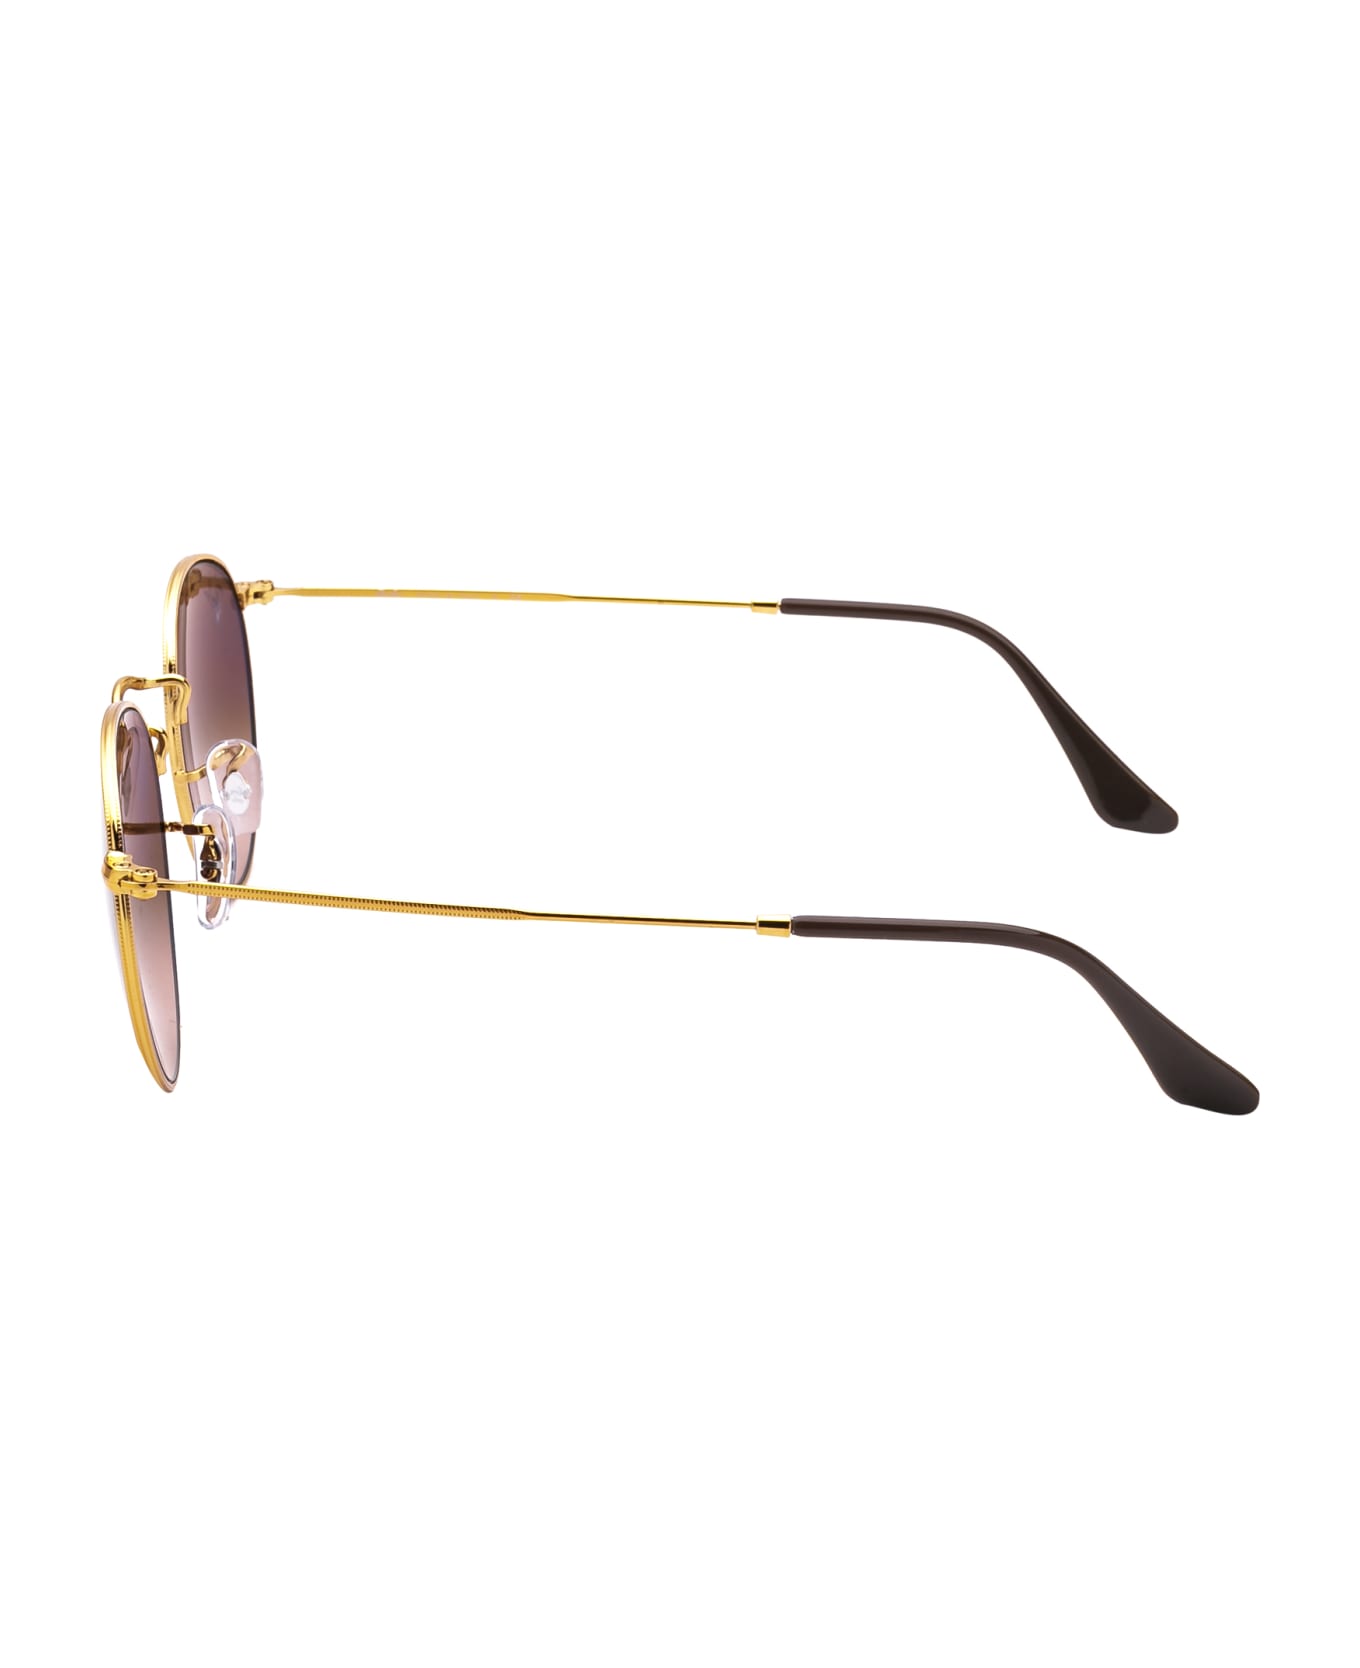 Ray-Ban Round Metal Sunglasses - 9001A5 LIGHT BRONZE